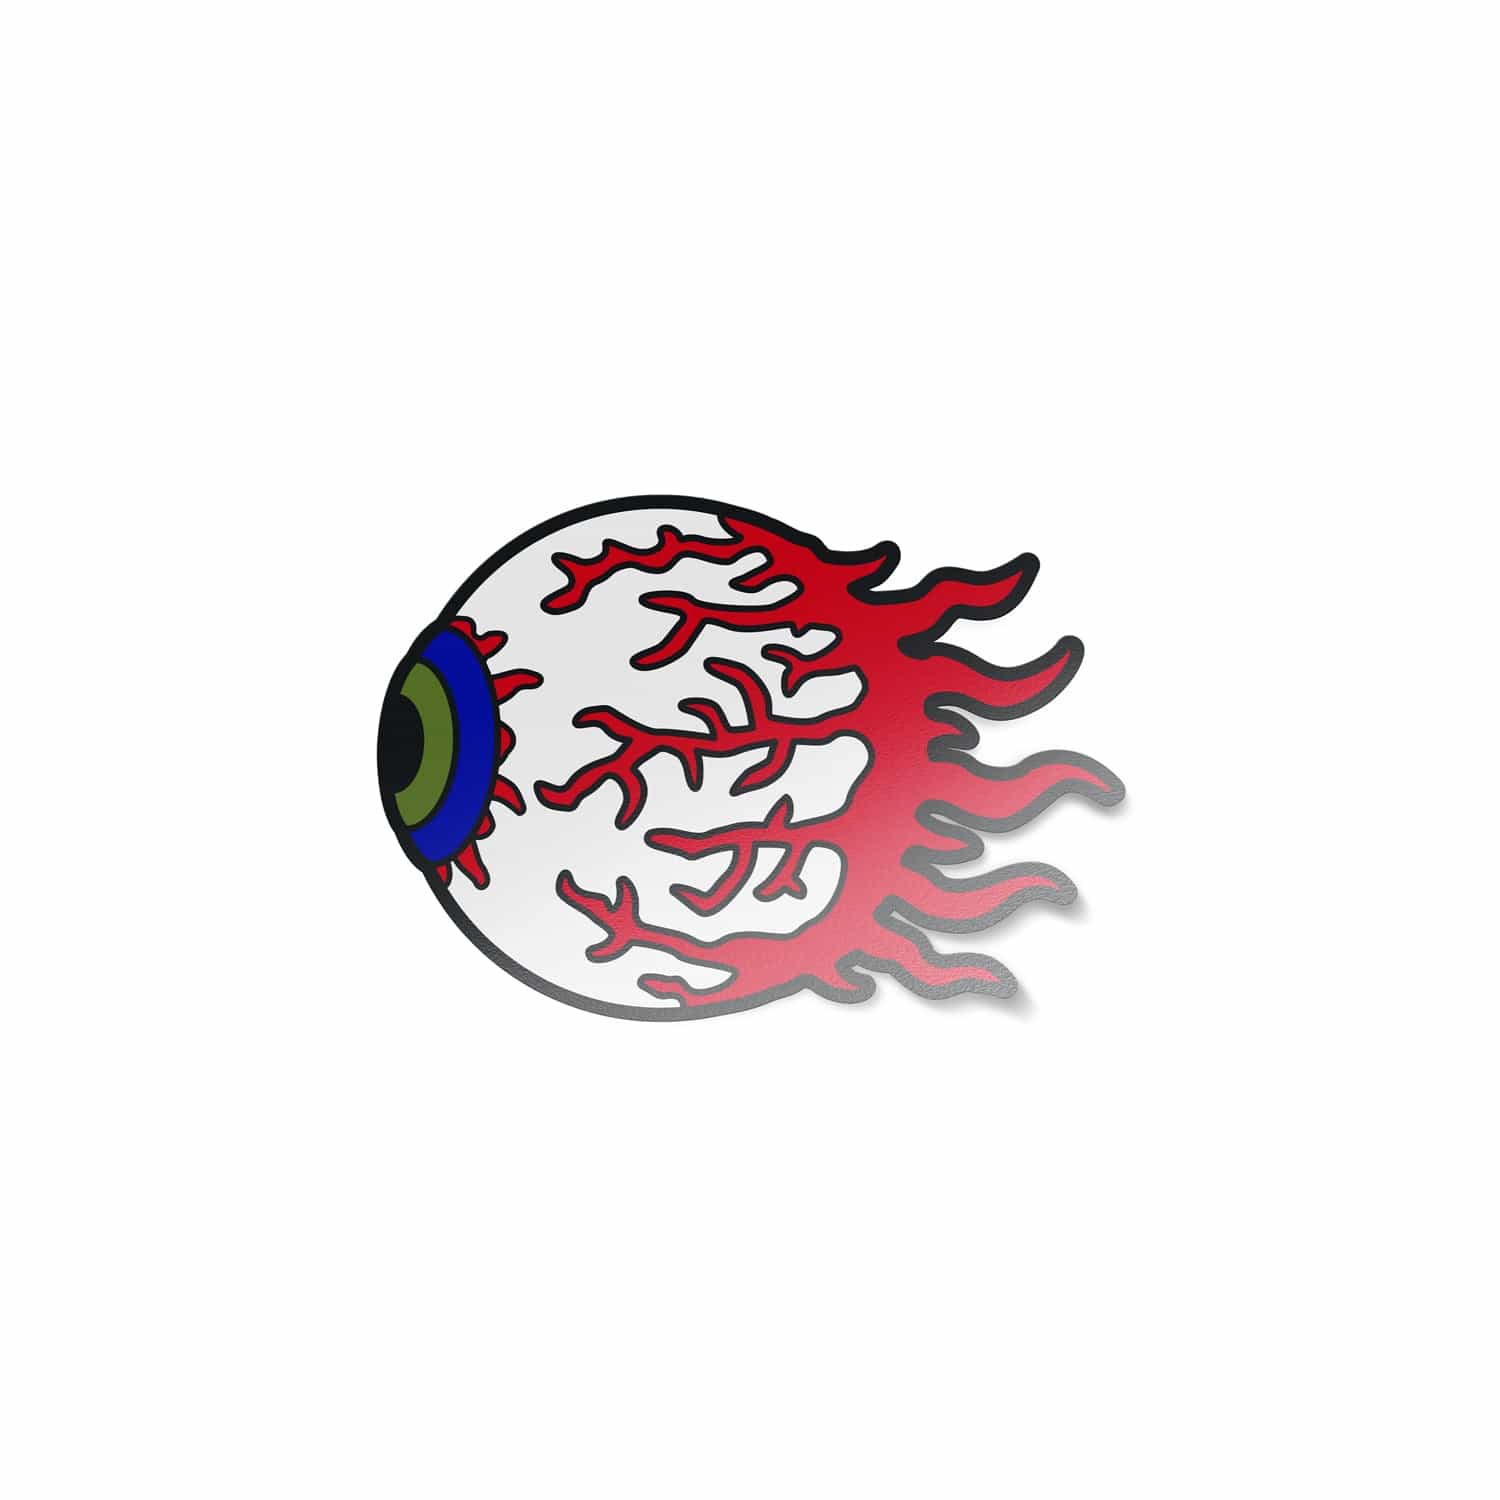 Terraria - Eye of Cthulhu Glow-in-the-Dark Sticker